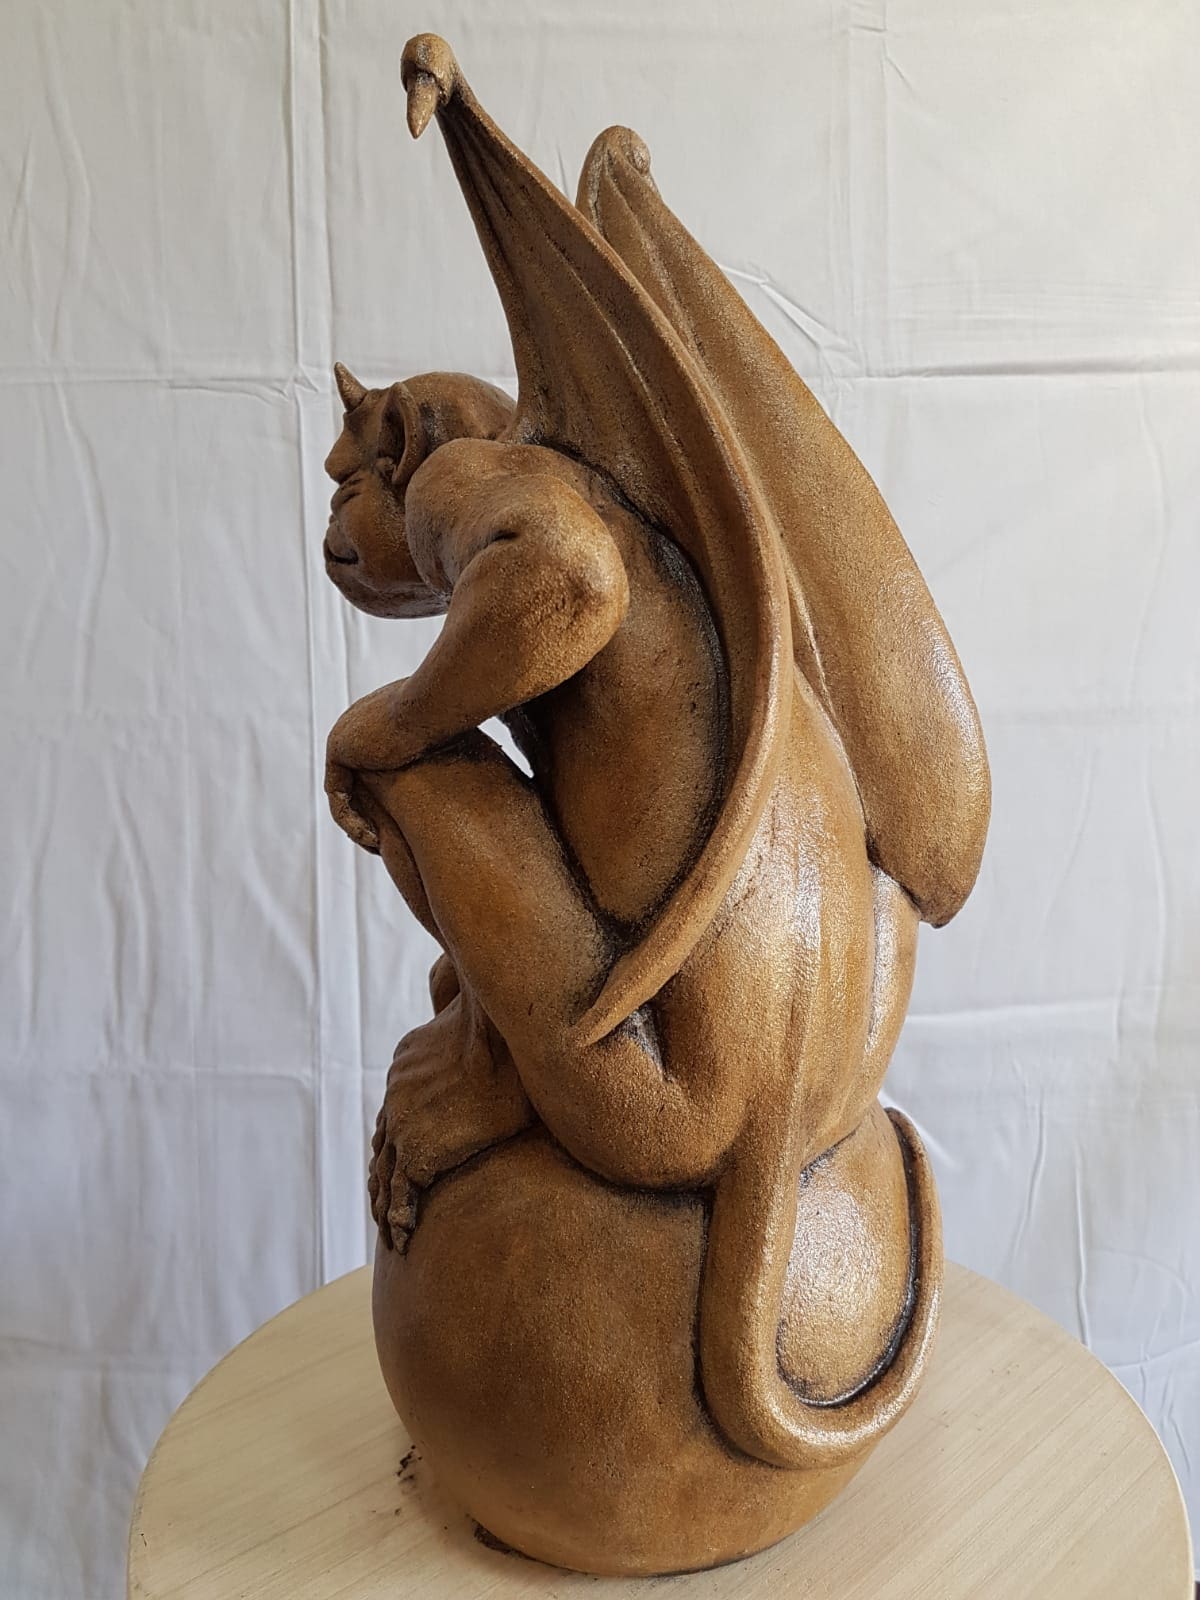 Back view of gargoyle goblin sculpture